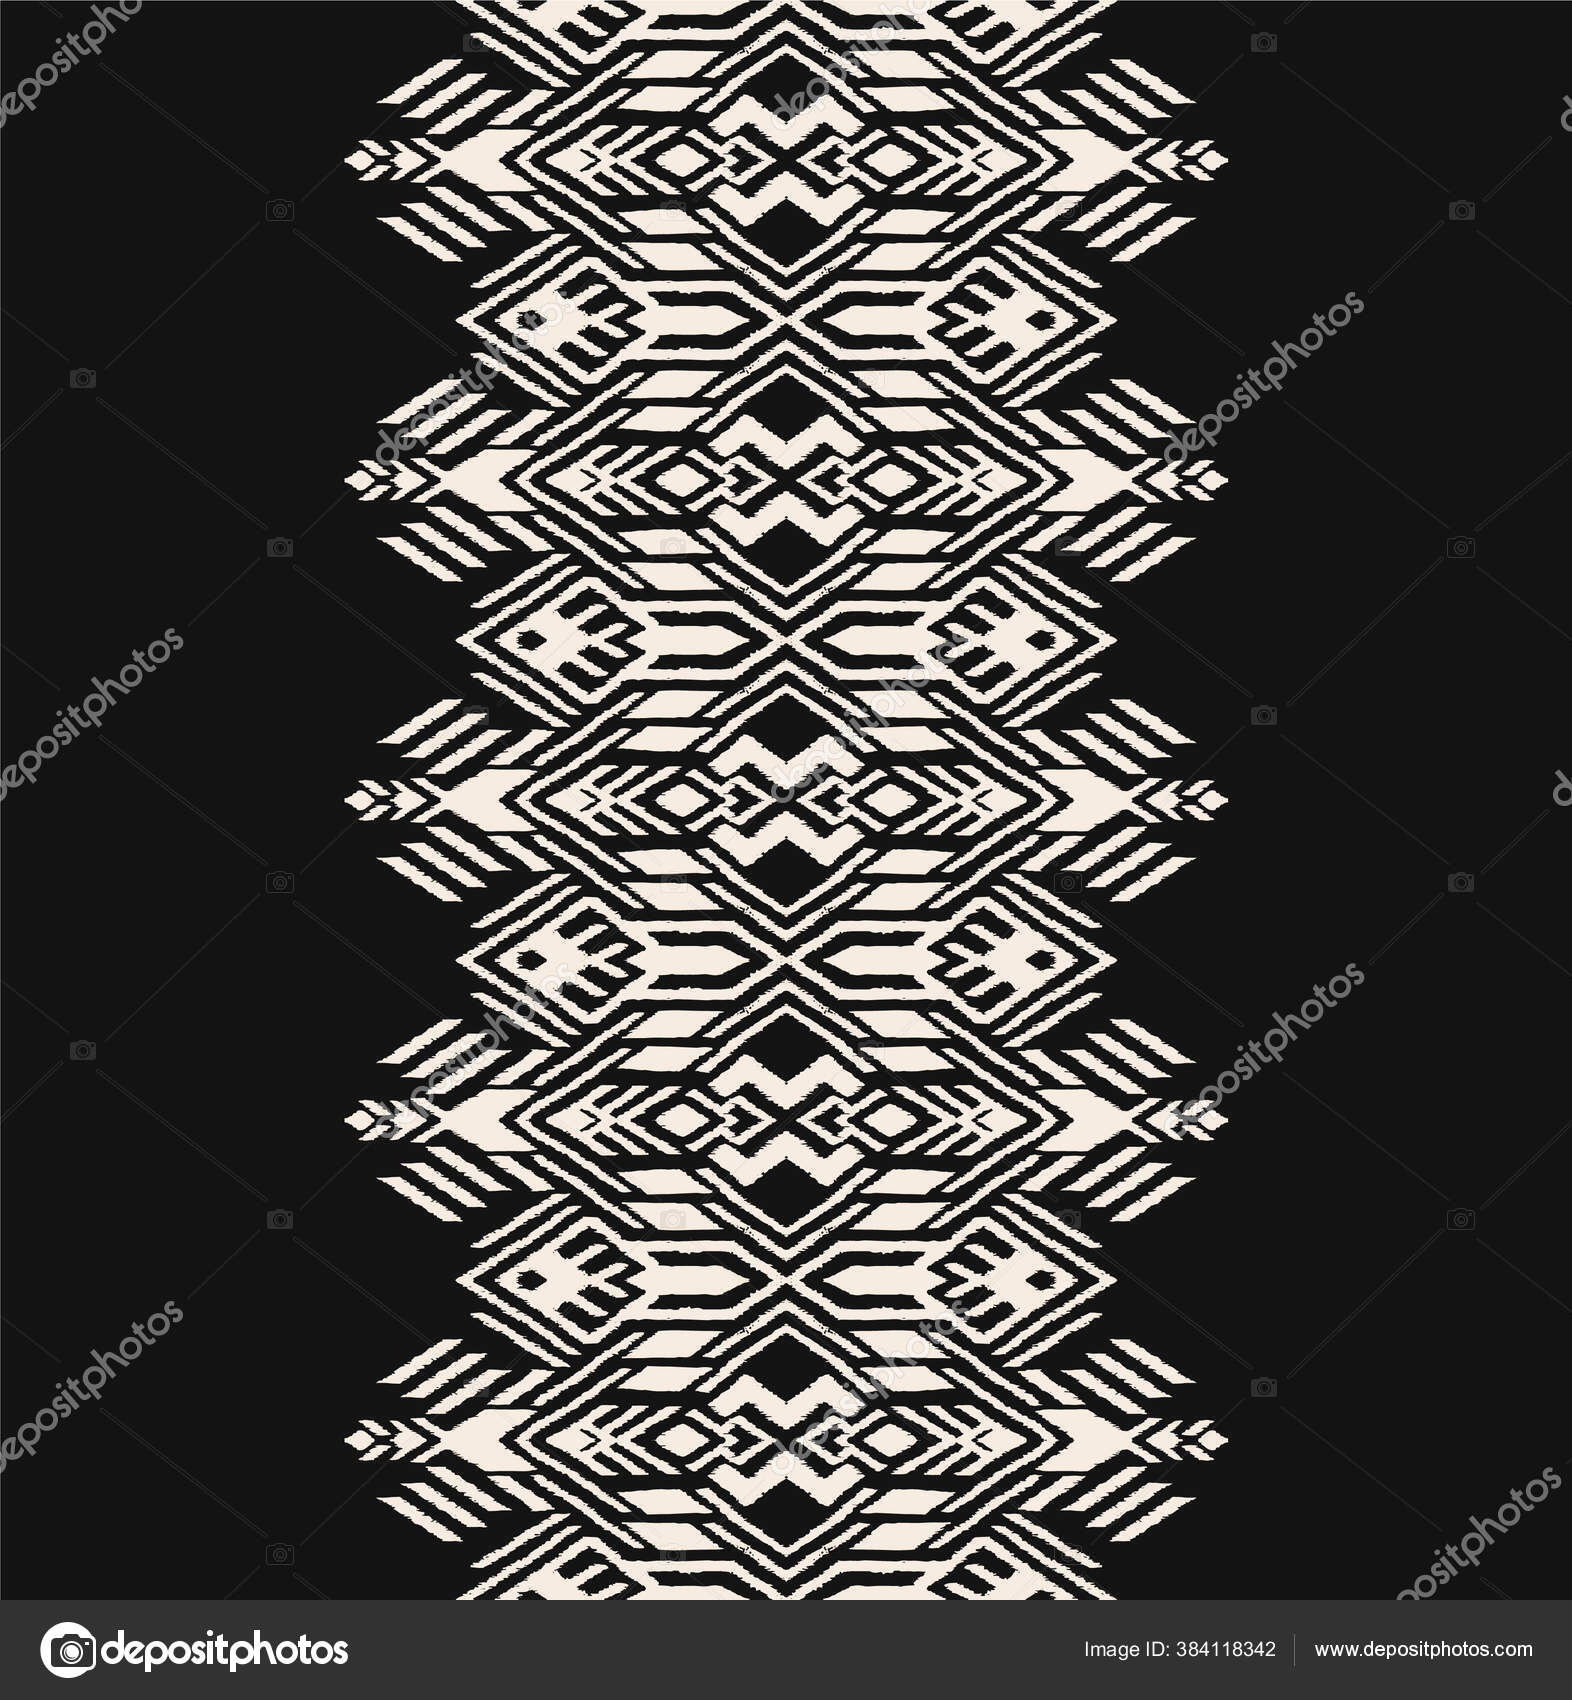 Ottoman Tile Tezhip Motifs Are Very Similar To Each Other Sacred Geometry Star Mandala Vector Illustration Ten Sided G Tezhip Kutsal Geometri Sanat Desen